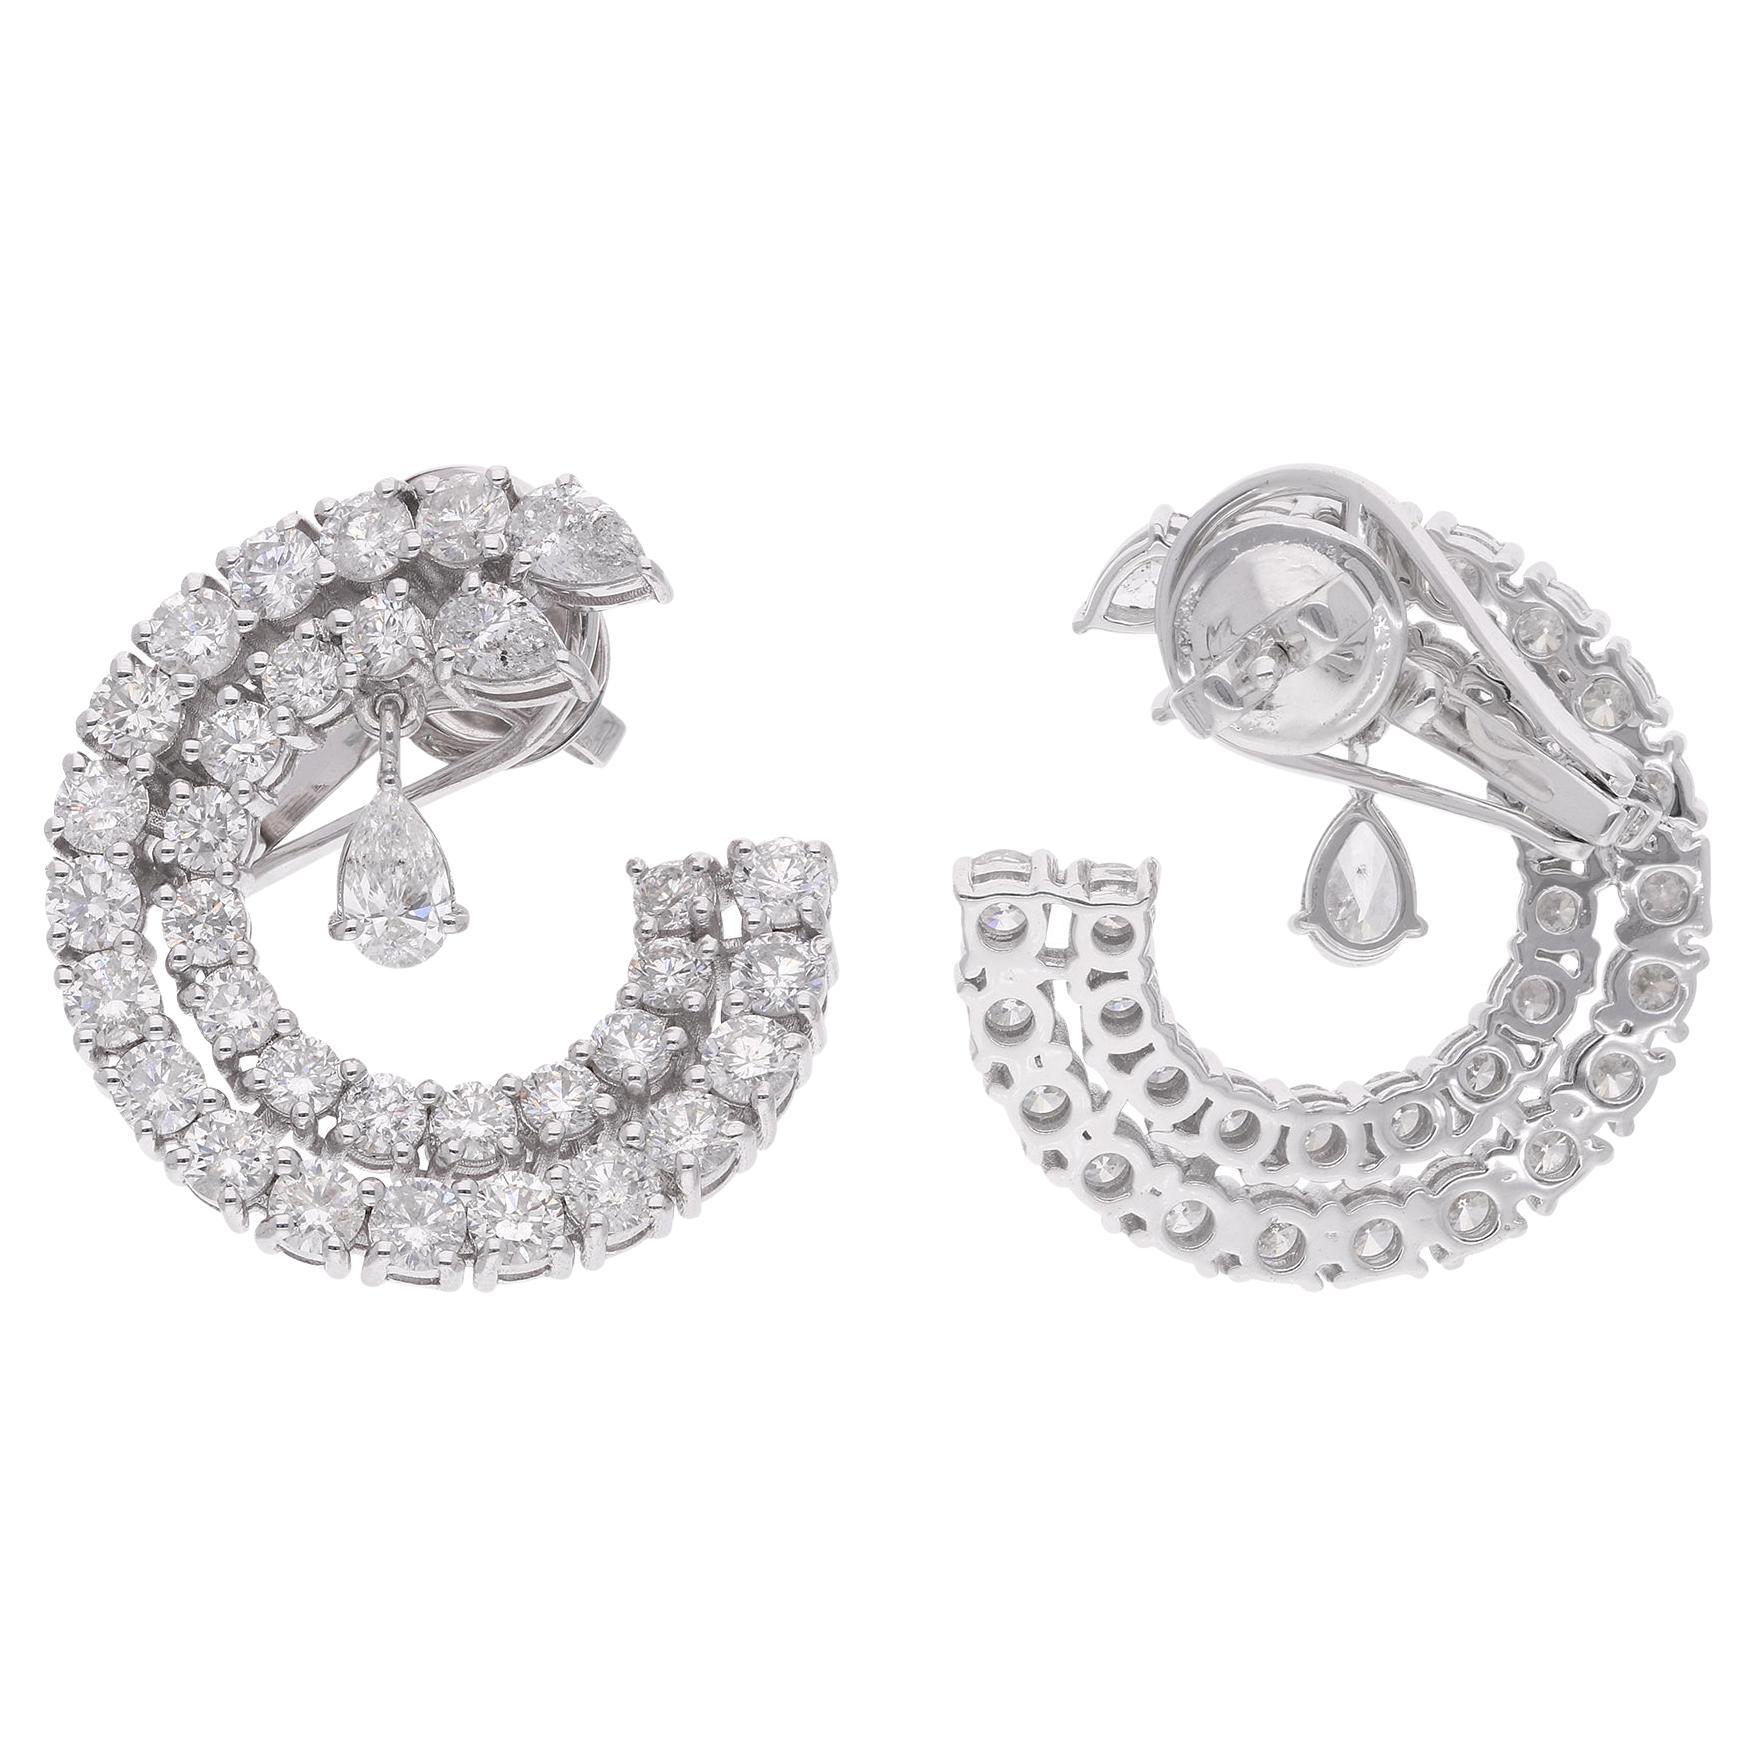 Real 5 Carat Pear & Round Diamond Earrings 14 Karat White Gold Handmade Jewelry For Sale